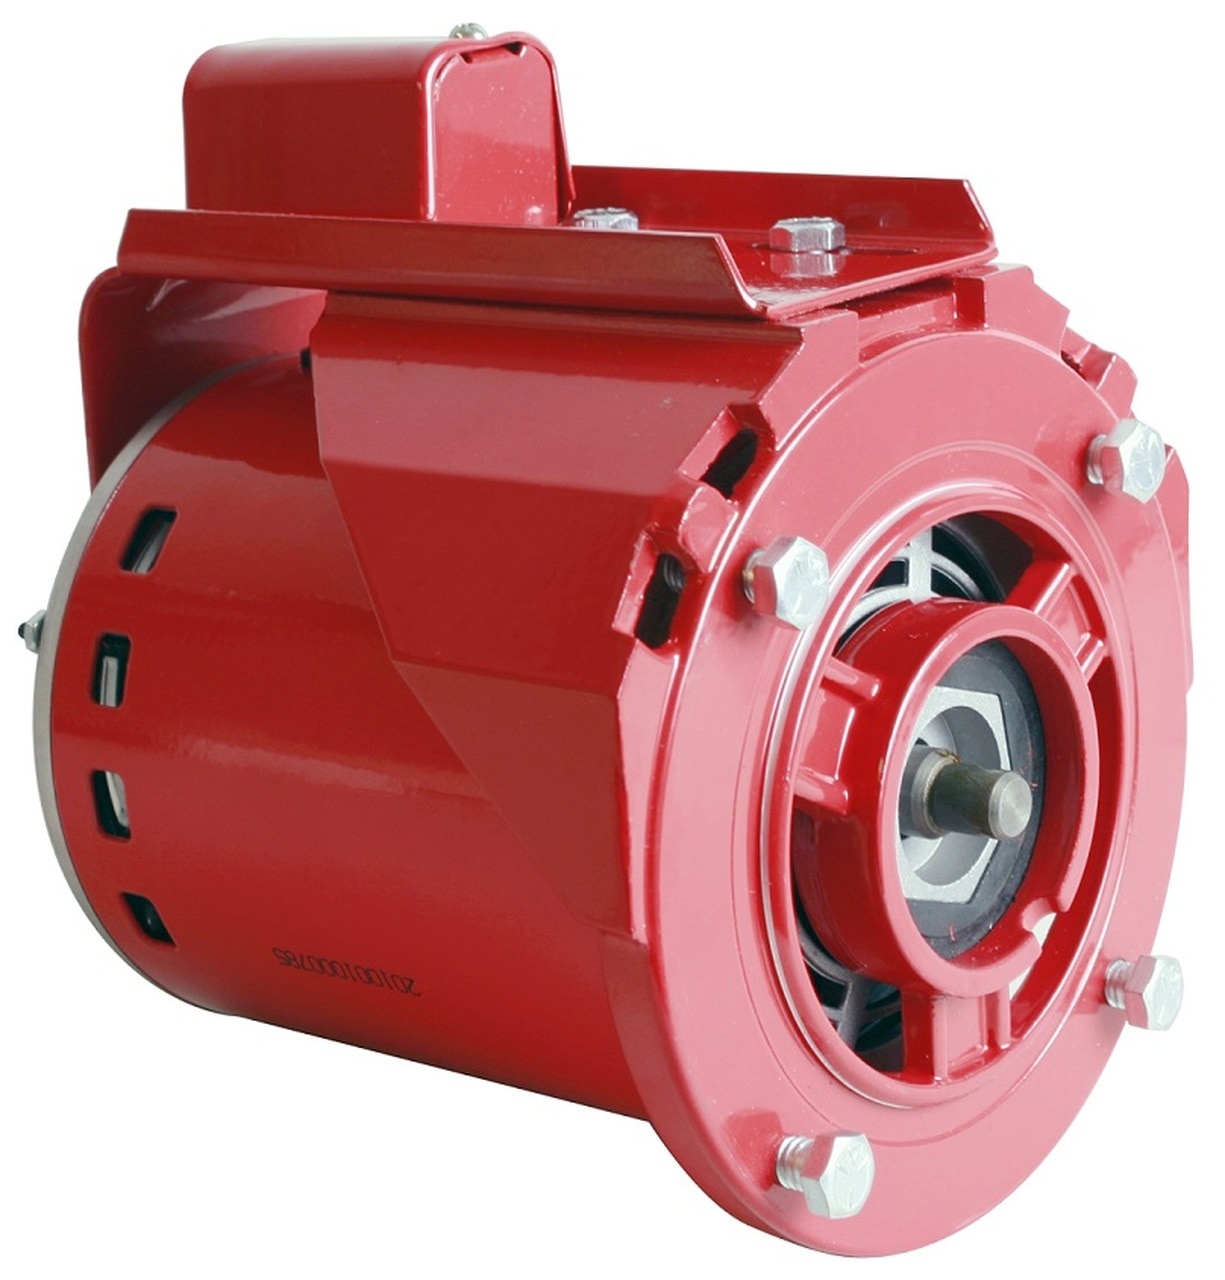 Armstrong Pumps Pump Motor, 1/3 hp, 115V AC  816141-002 - image 1 of 1